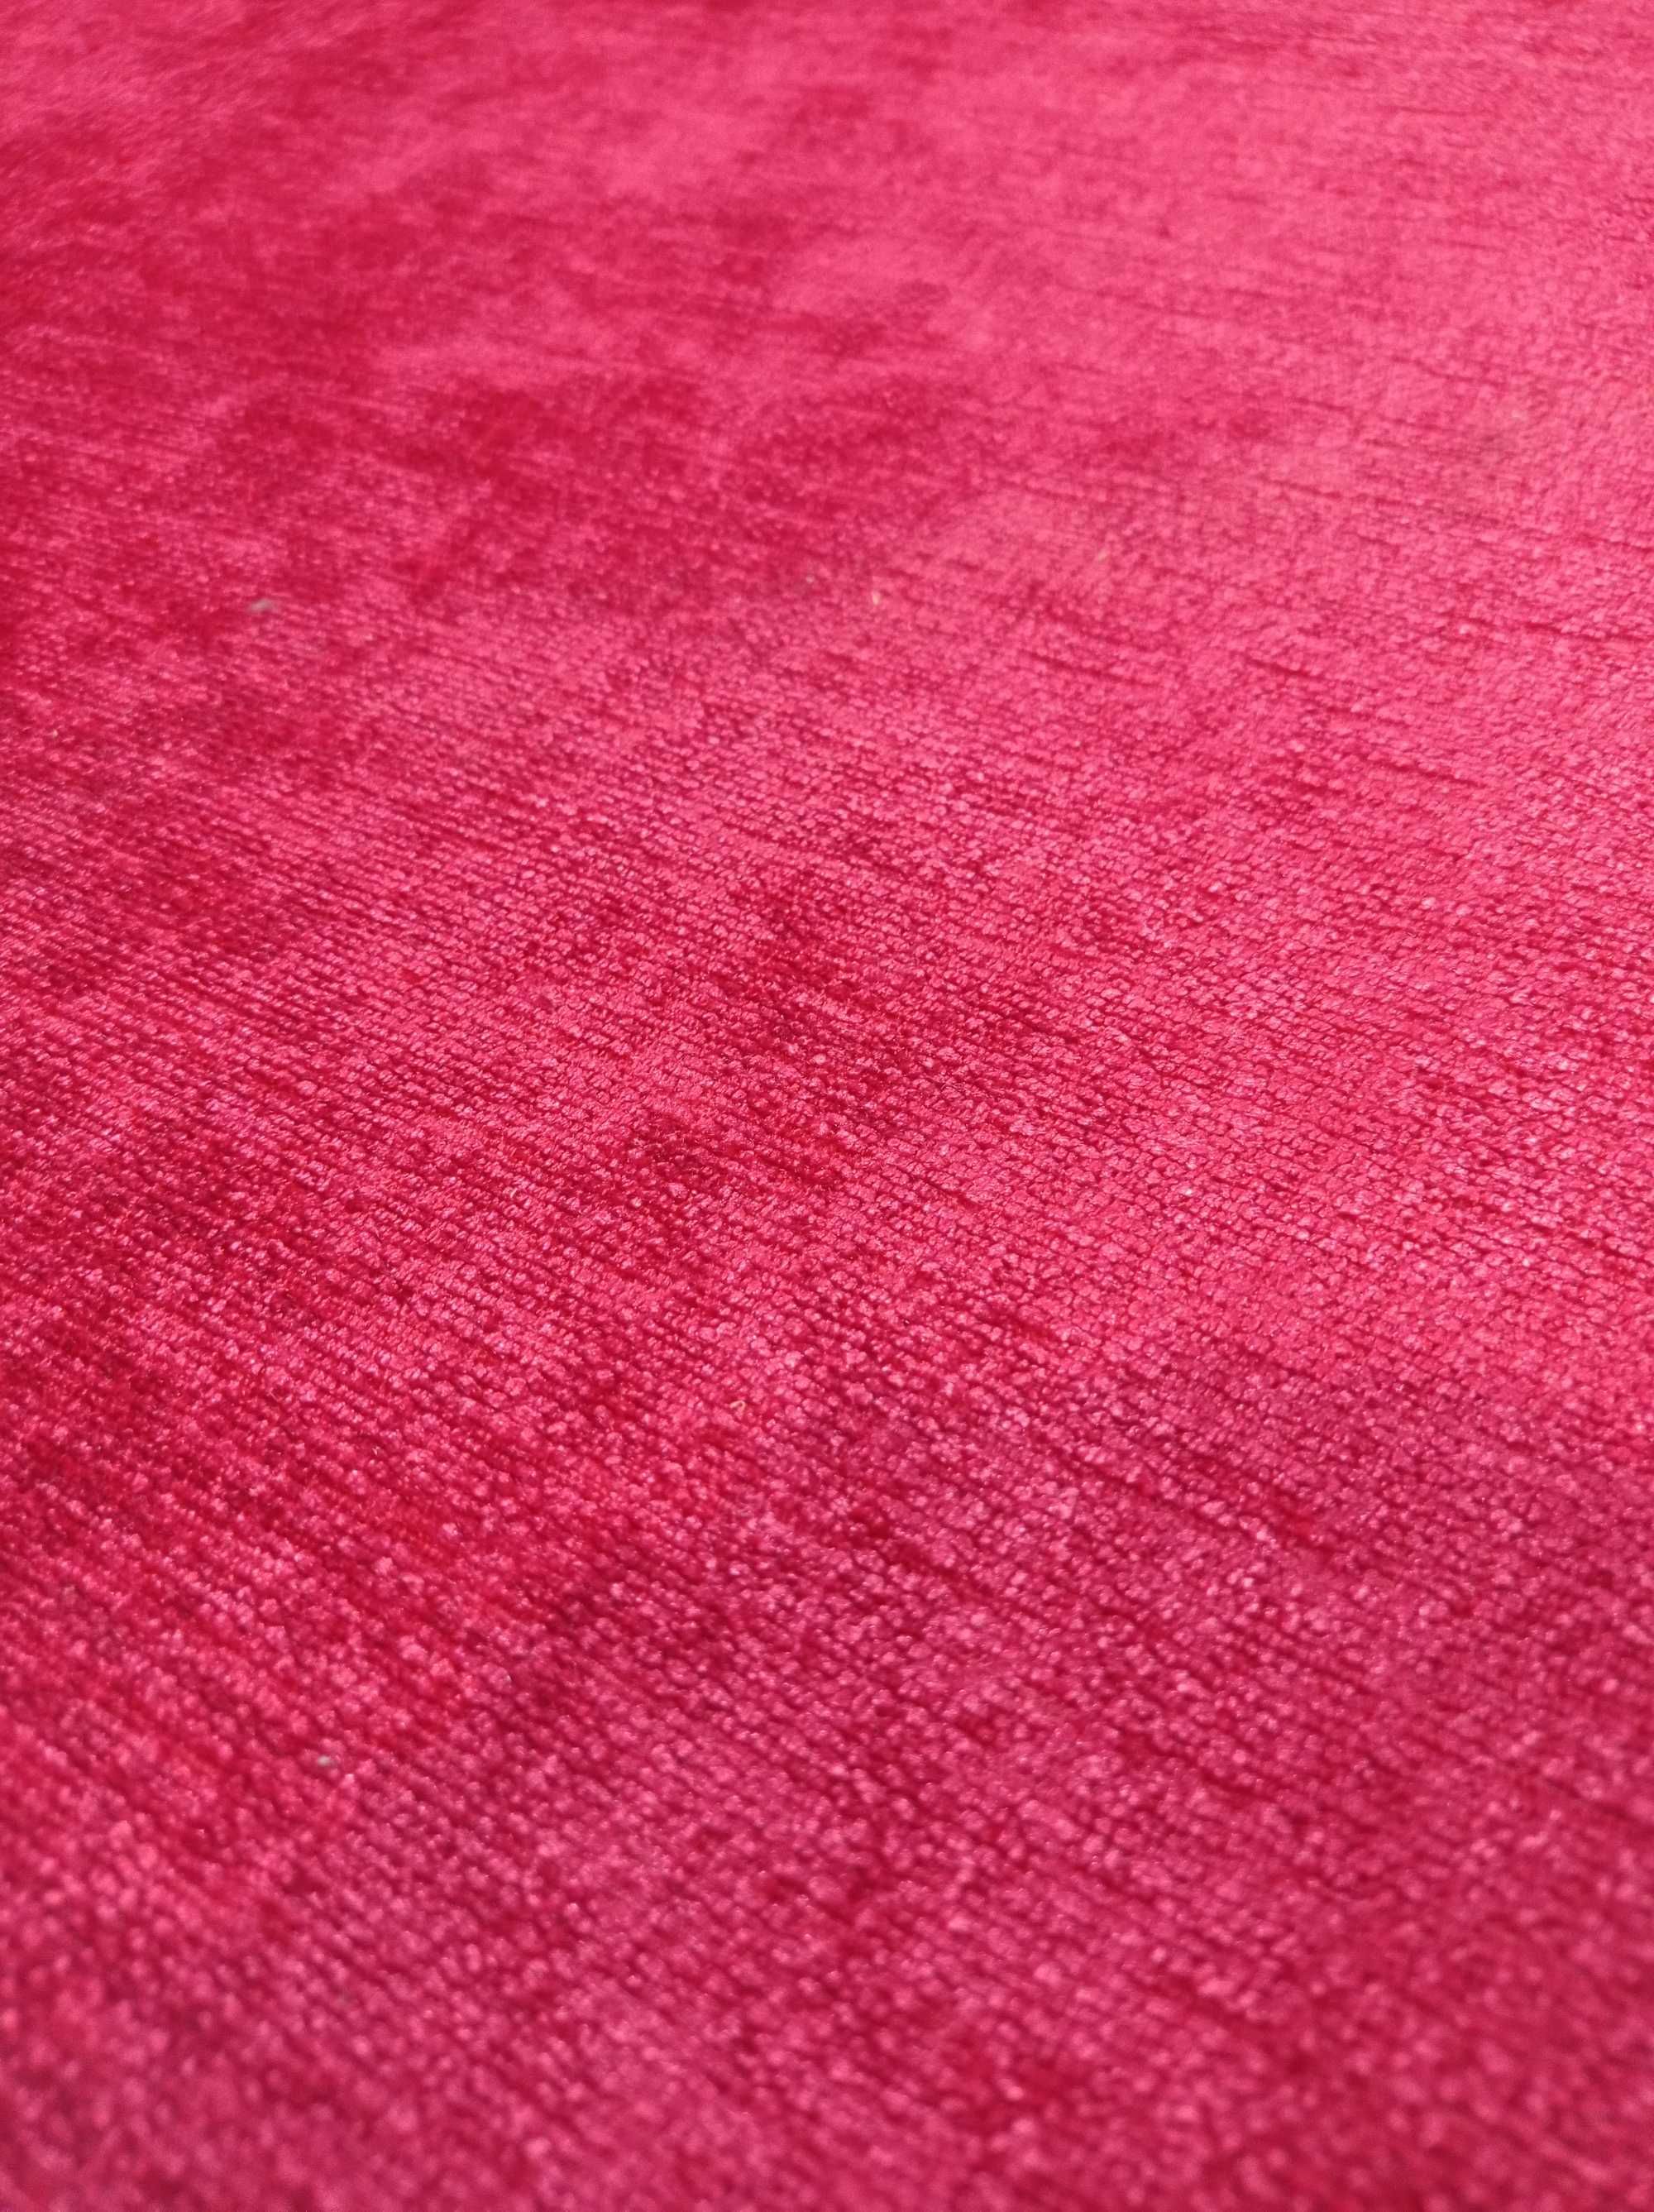 Tkanina obiciowa dwustronna bordowa czerwona